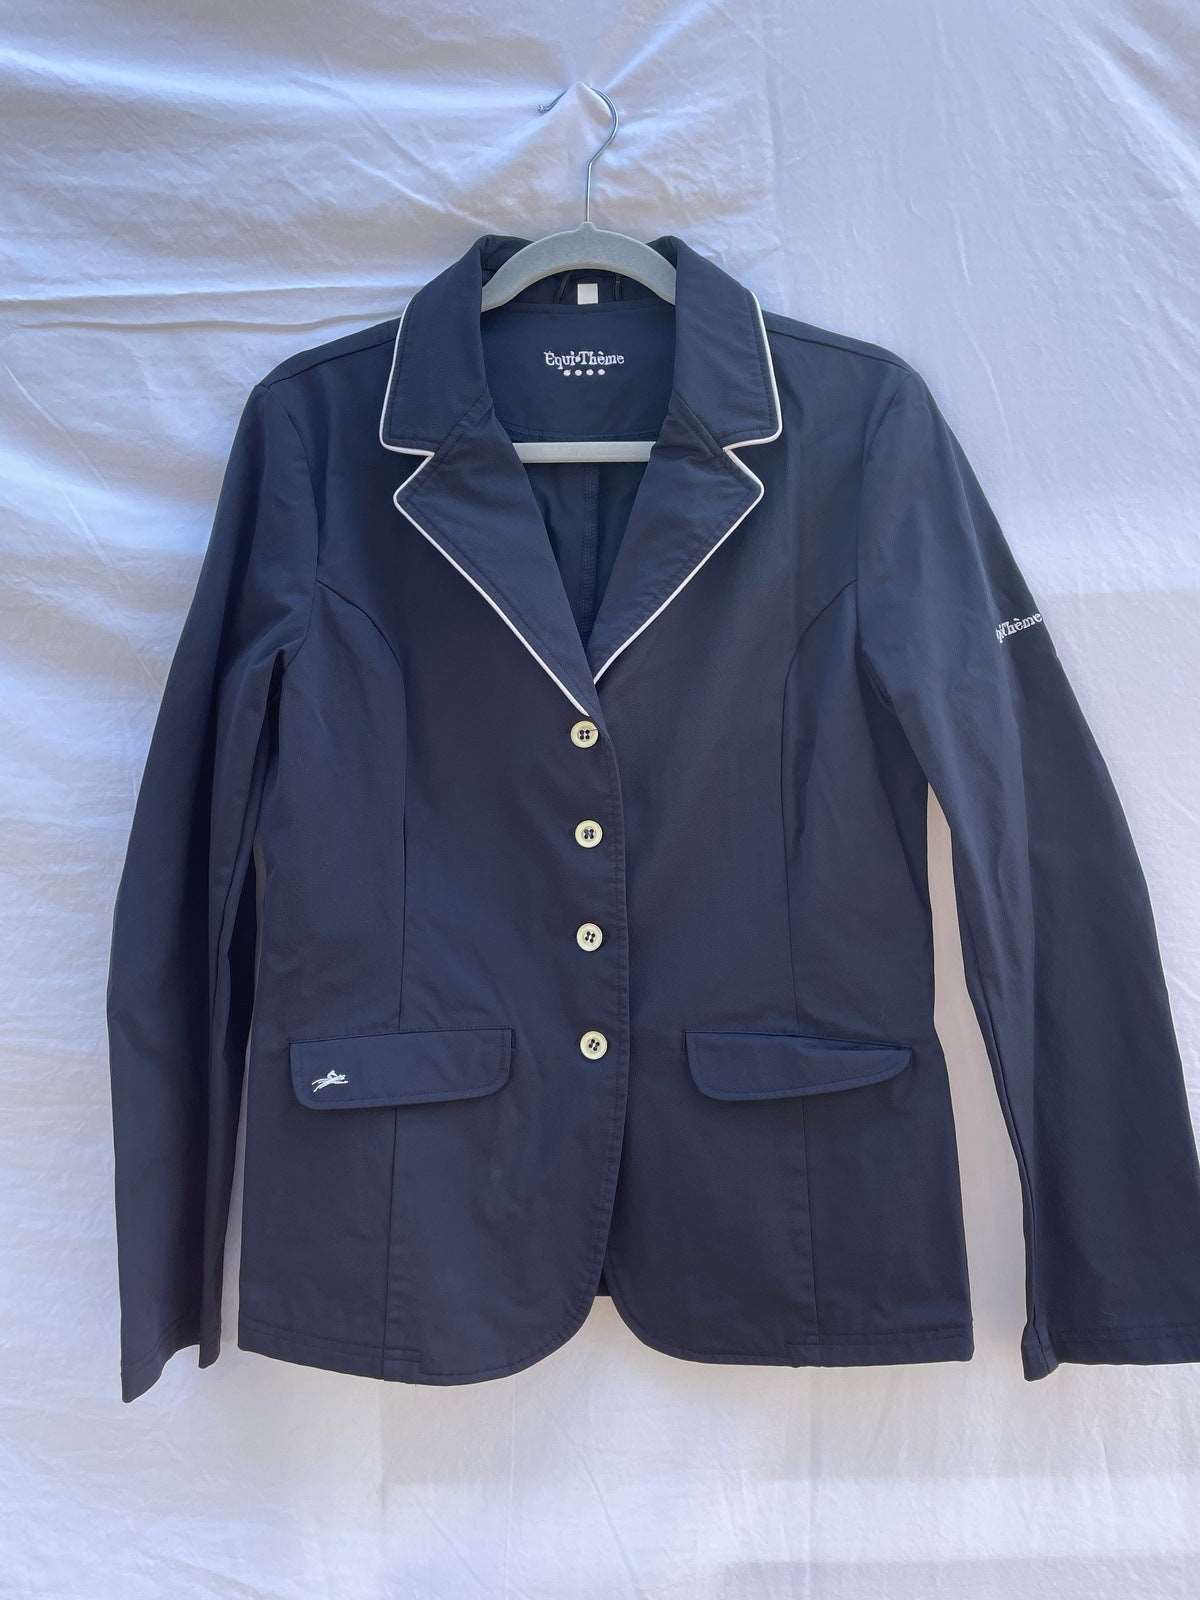 ThriftedEquestrian Clothing 42 EquiTheme Show Jacket - Size 42